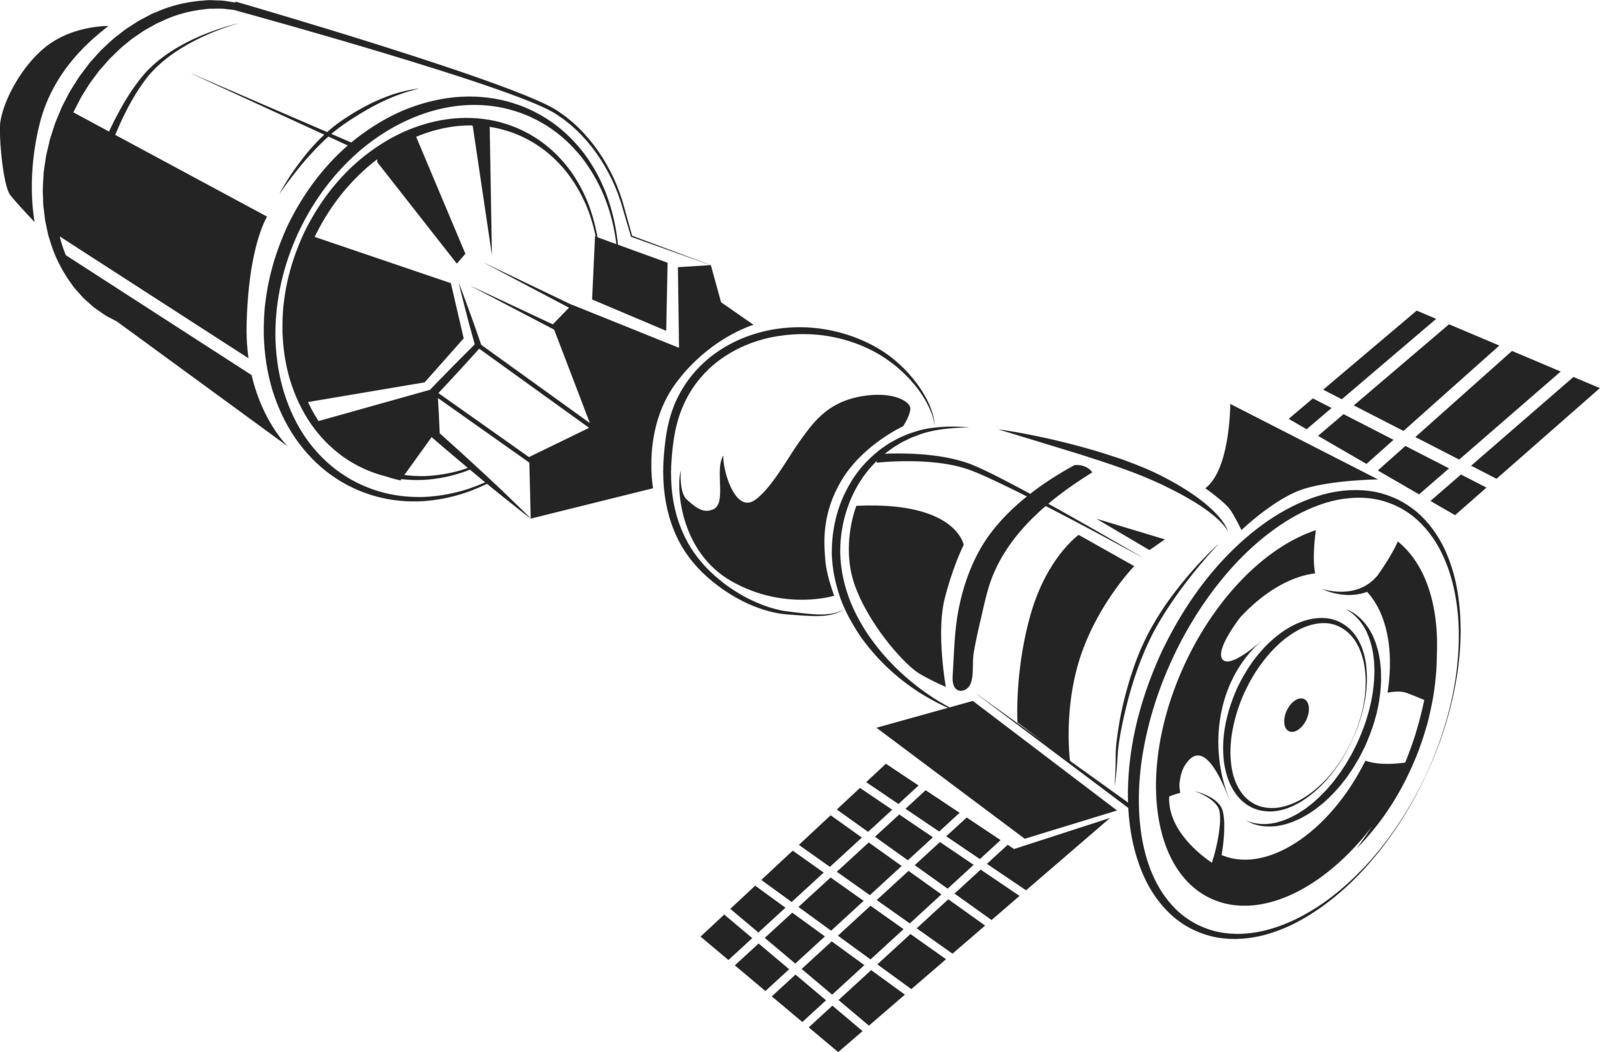 Satellite icon. Artificial orbital ship. Spacecraft symbol isolated on white background